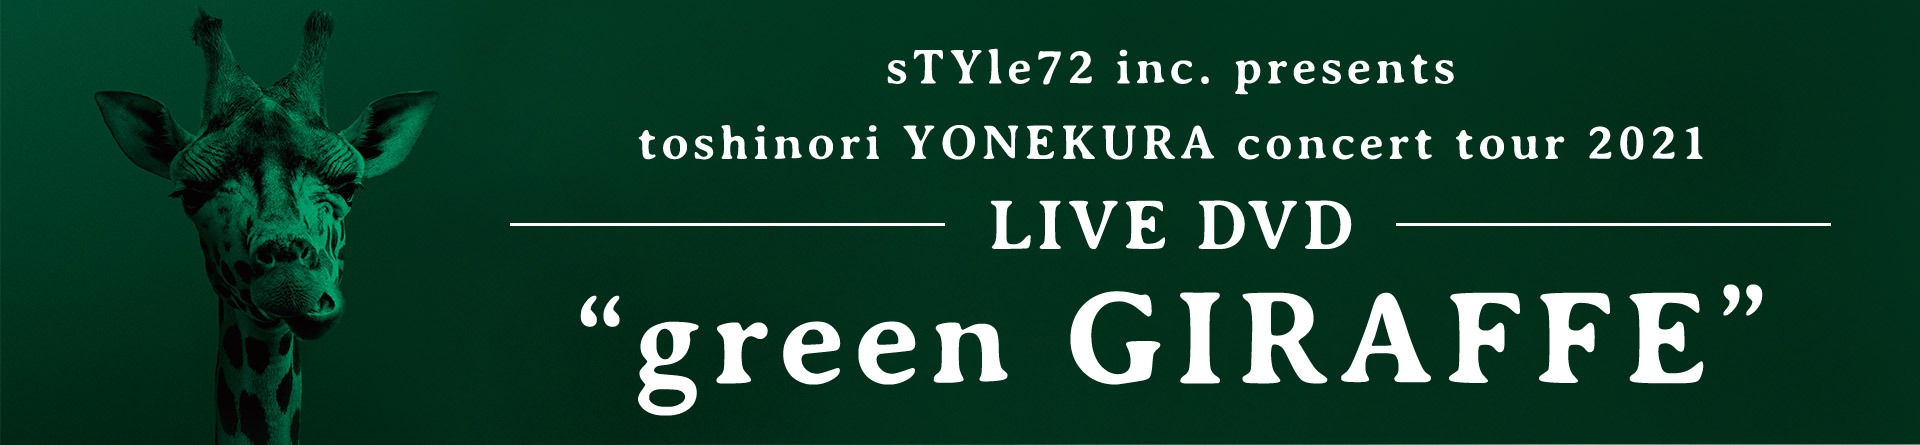 DVD “green GIRAFFE”